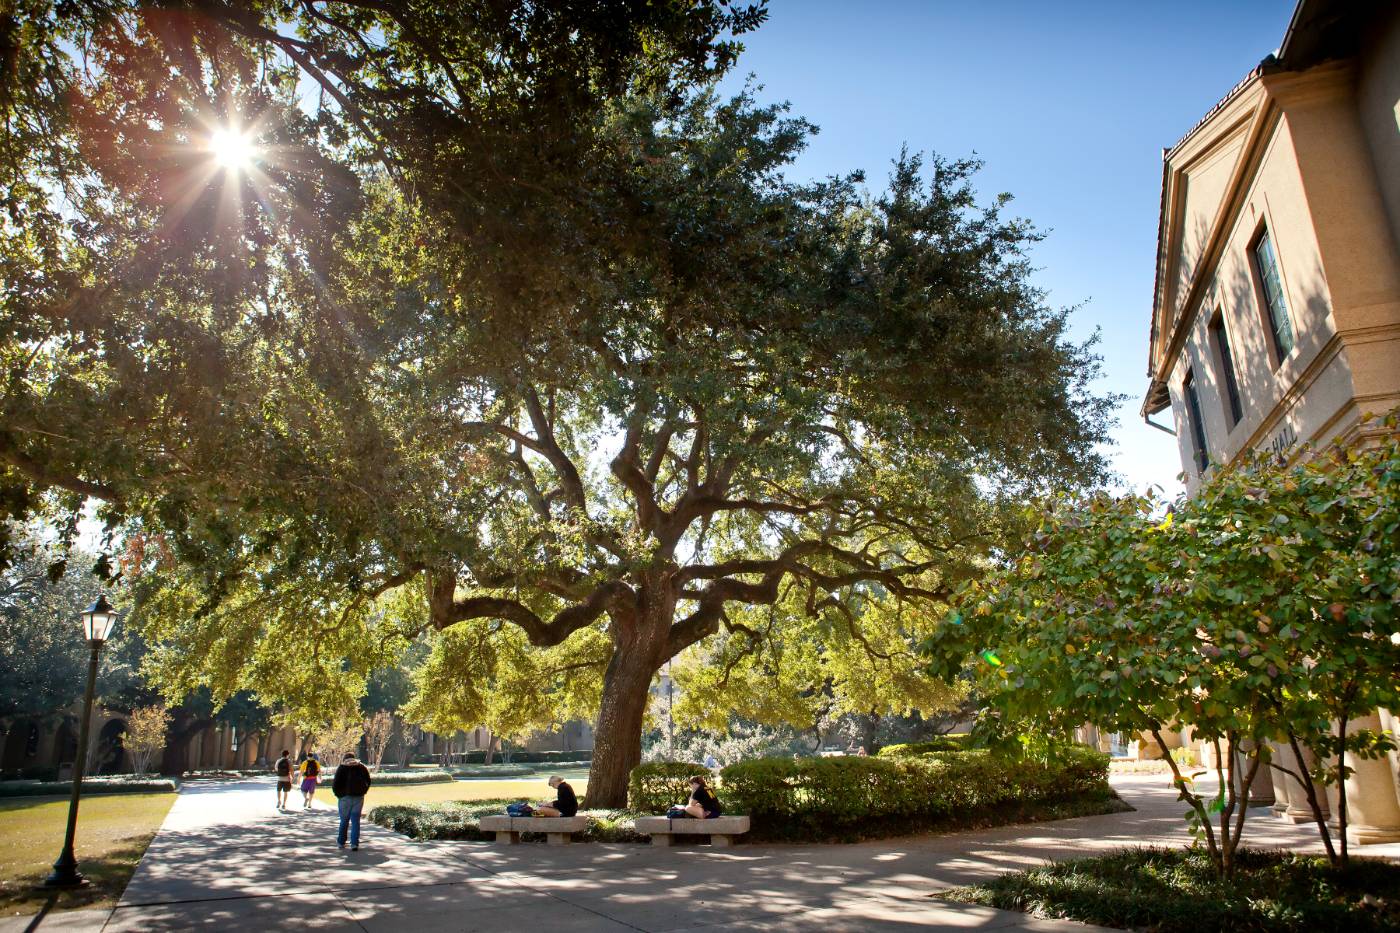 Students walking beneath sunny oaks in the LSU quadrangle